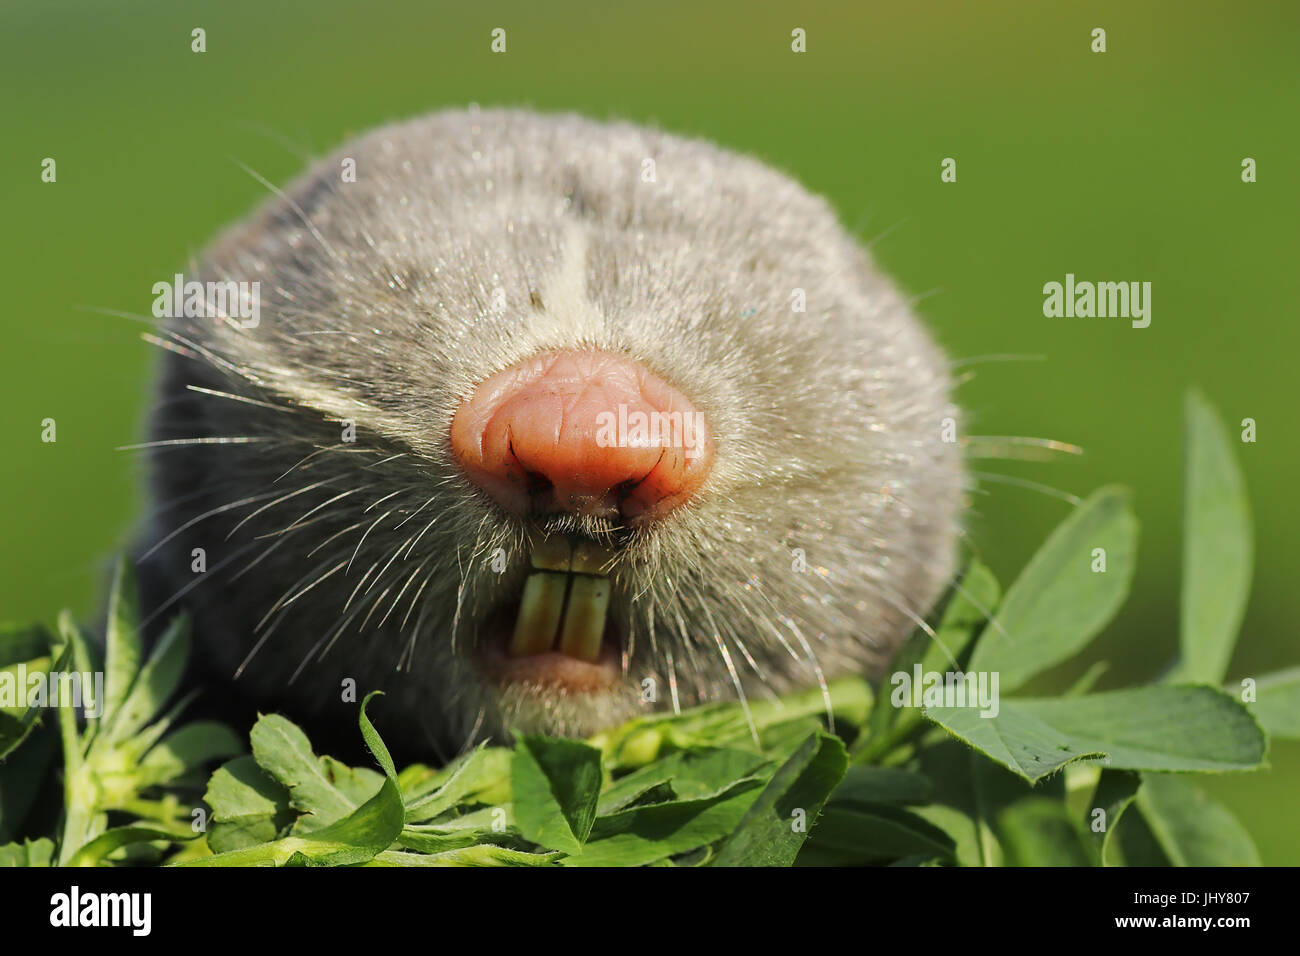 portrait of lesser mole rat ( Spalax leucodon ) Stock Photo